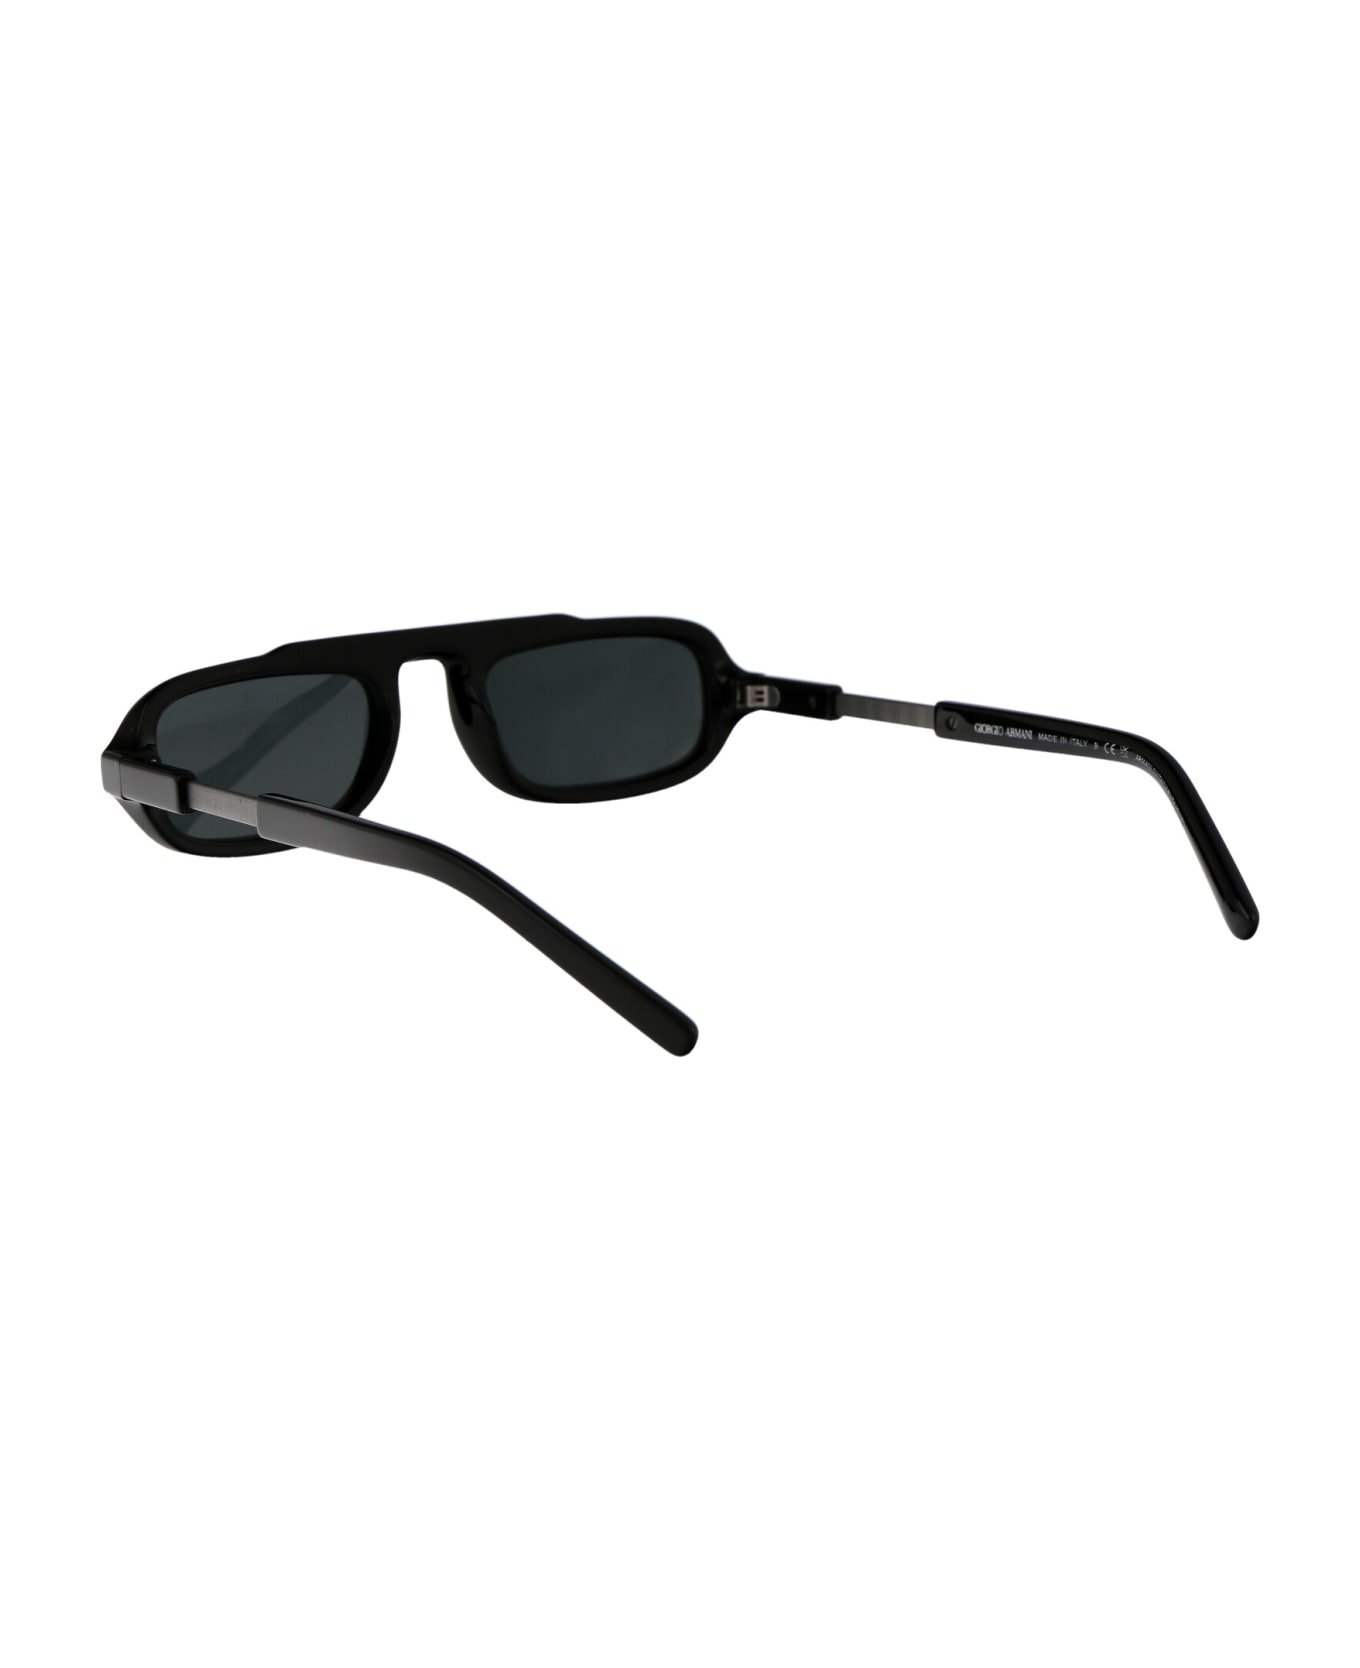 Giorgio Armani 0ar8203 Sunglasses - 587587 BLACK